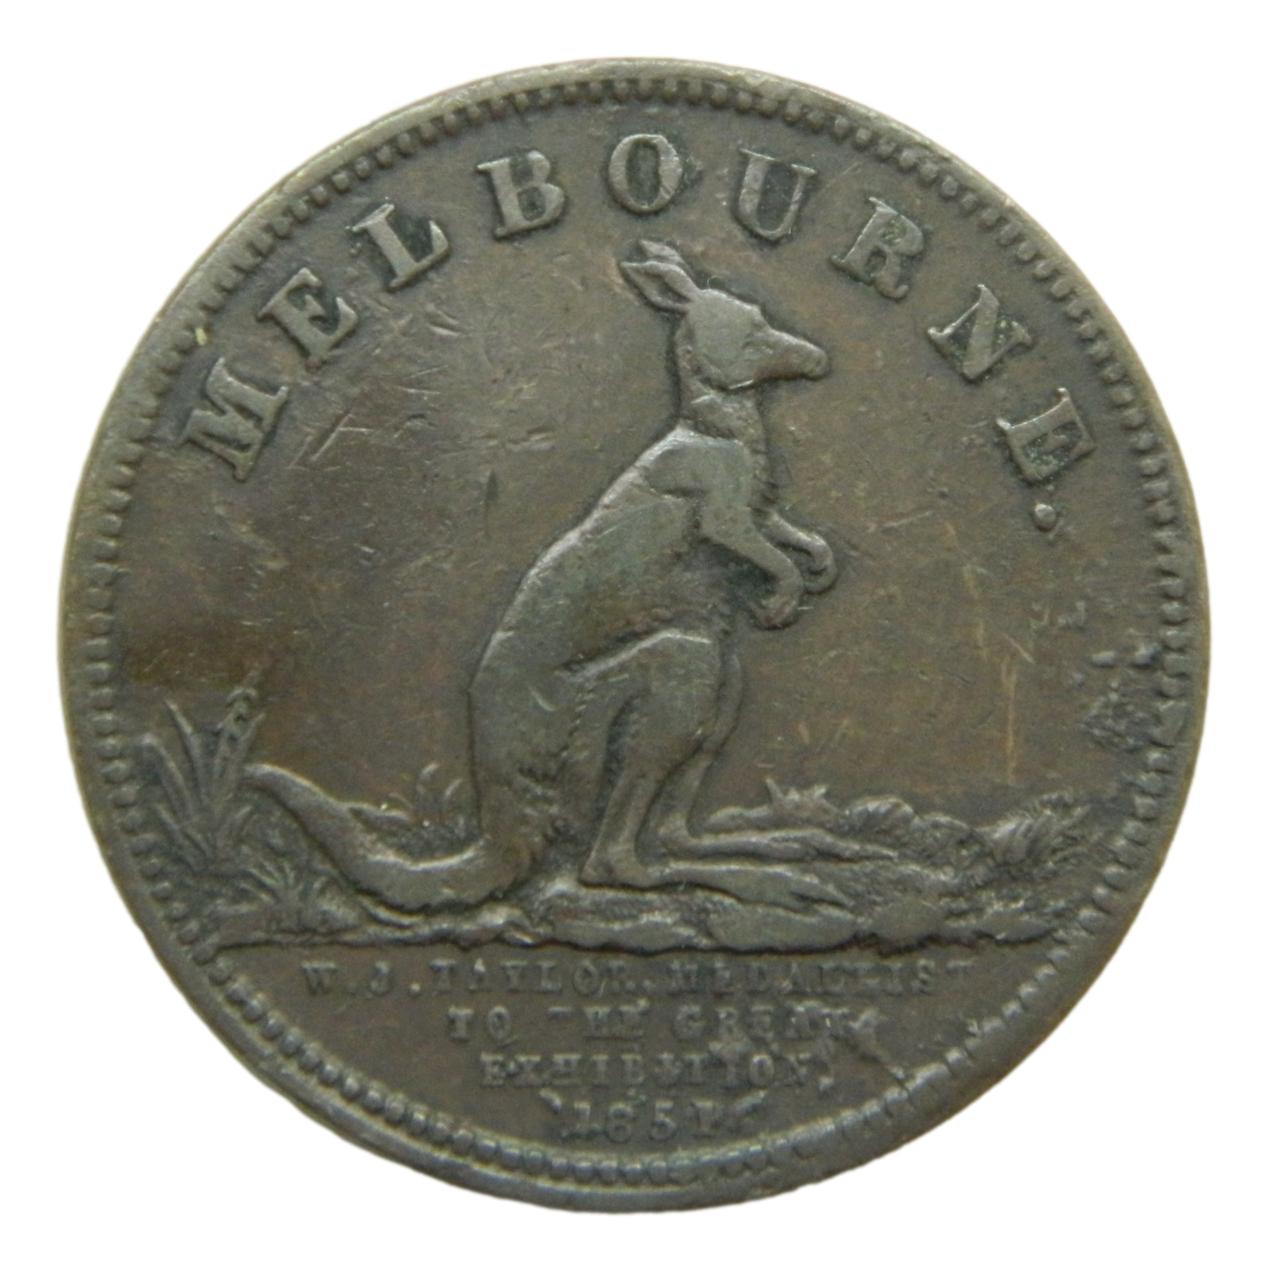 1851 - AUSTRALIA - 1/2 PENNY - MELBOURNE - S9/526